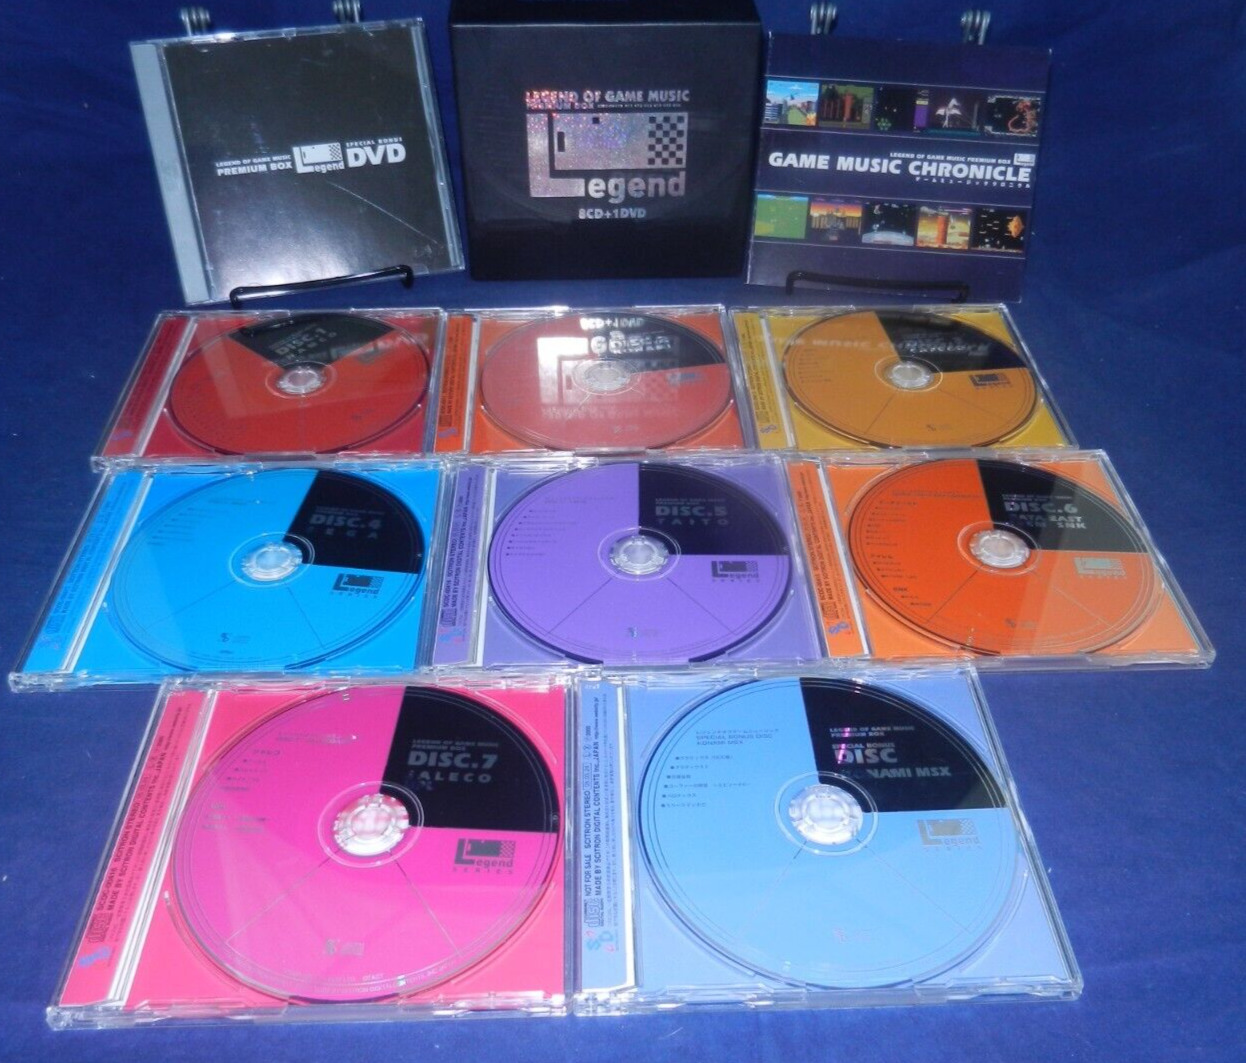 Legend of Game Music Premium Box, 8 CDs, 1 DVD-LN, JAPANESE Game Music, w/Manual